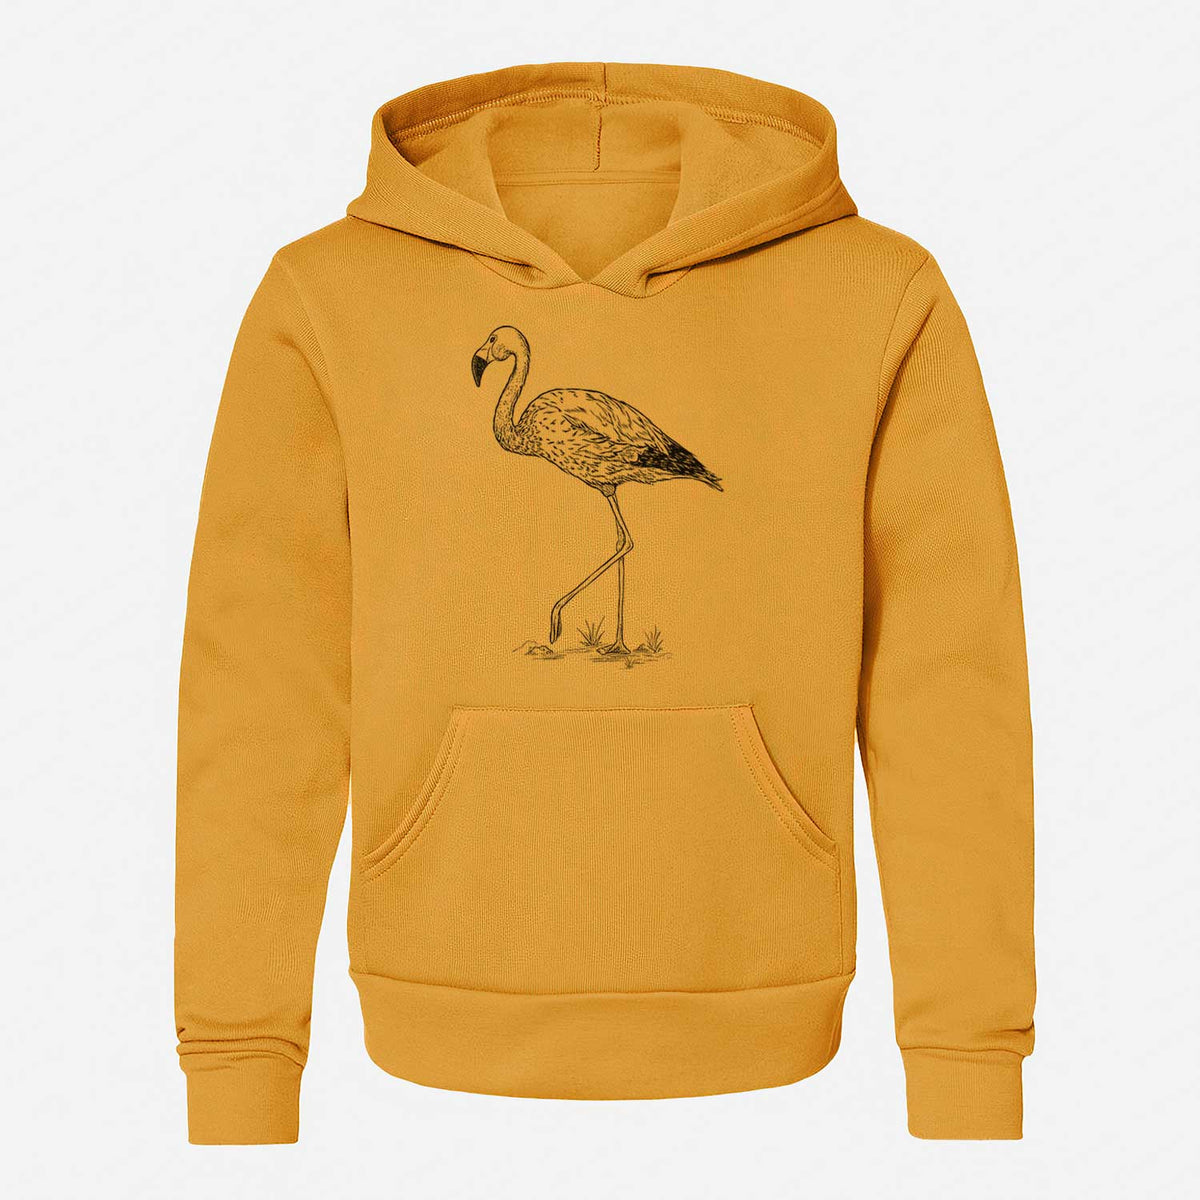 Andean Flamingo - Phoenicoparrus andinus - Youth Hoodie Sweatshirt